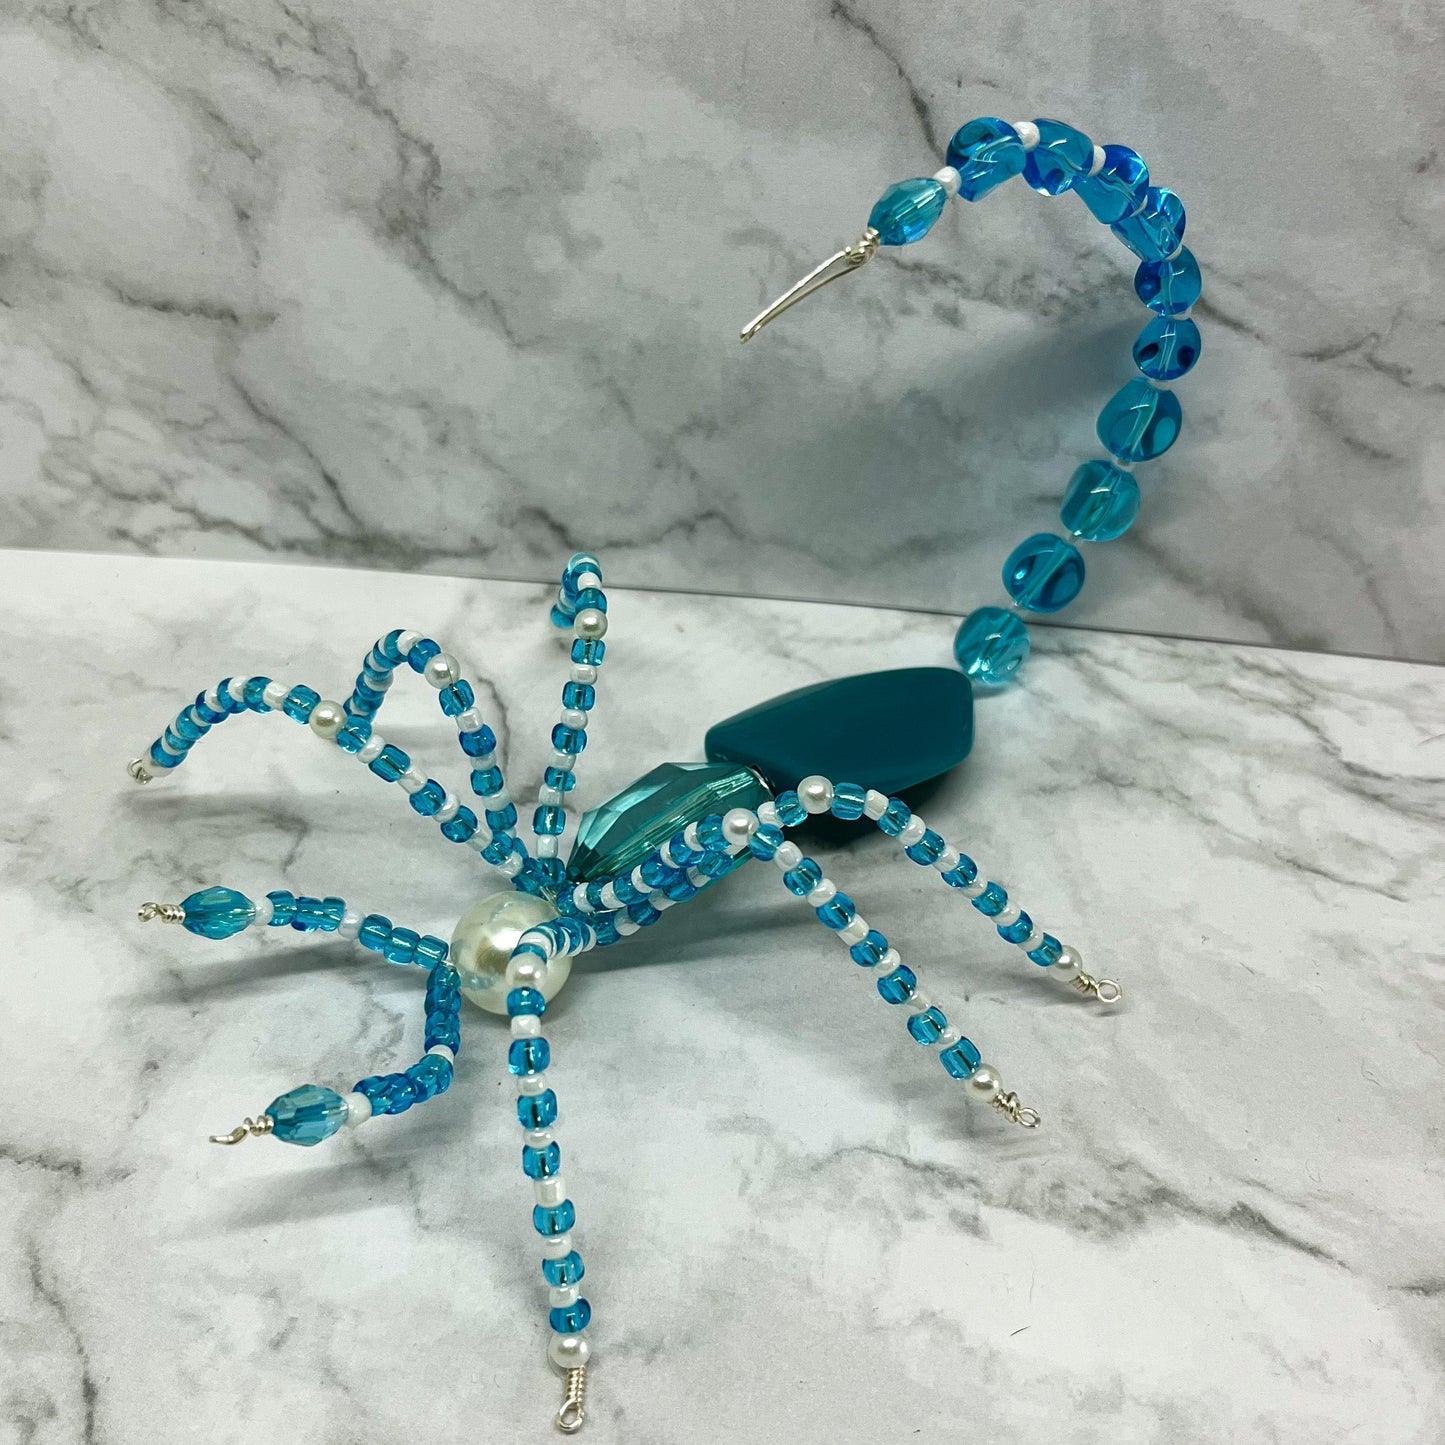 Unusual Scorpion Gift | Unique Scorpion Gift